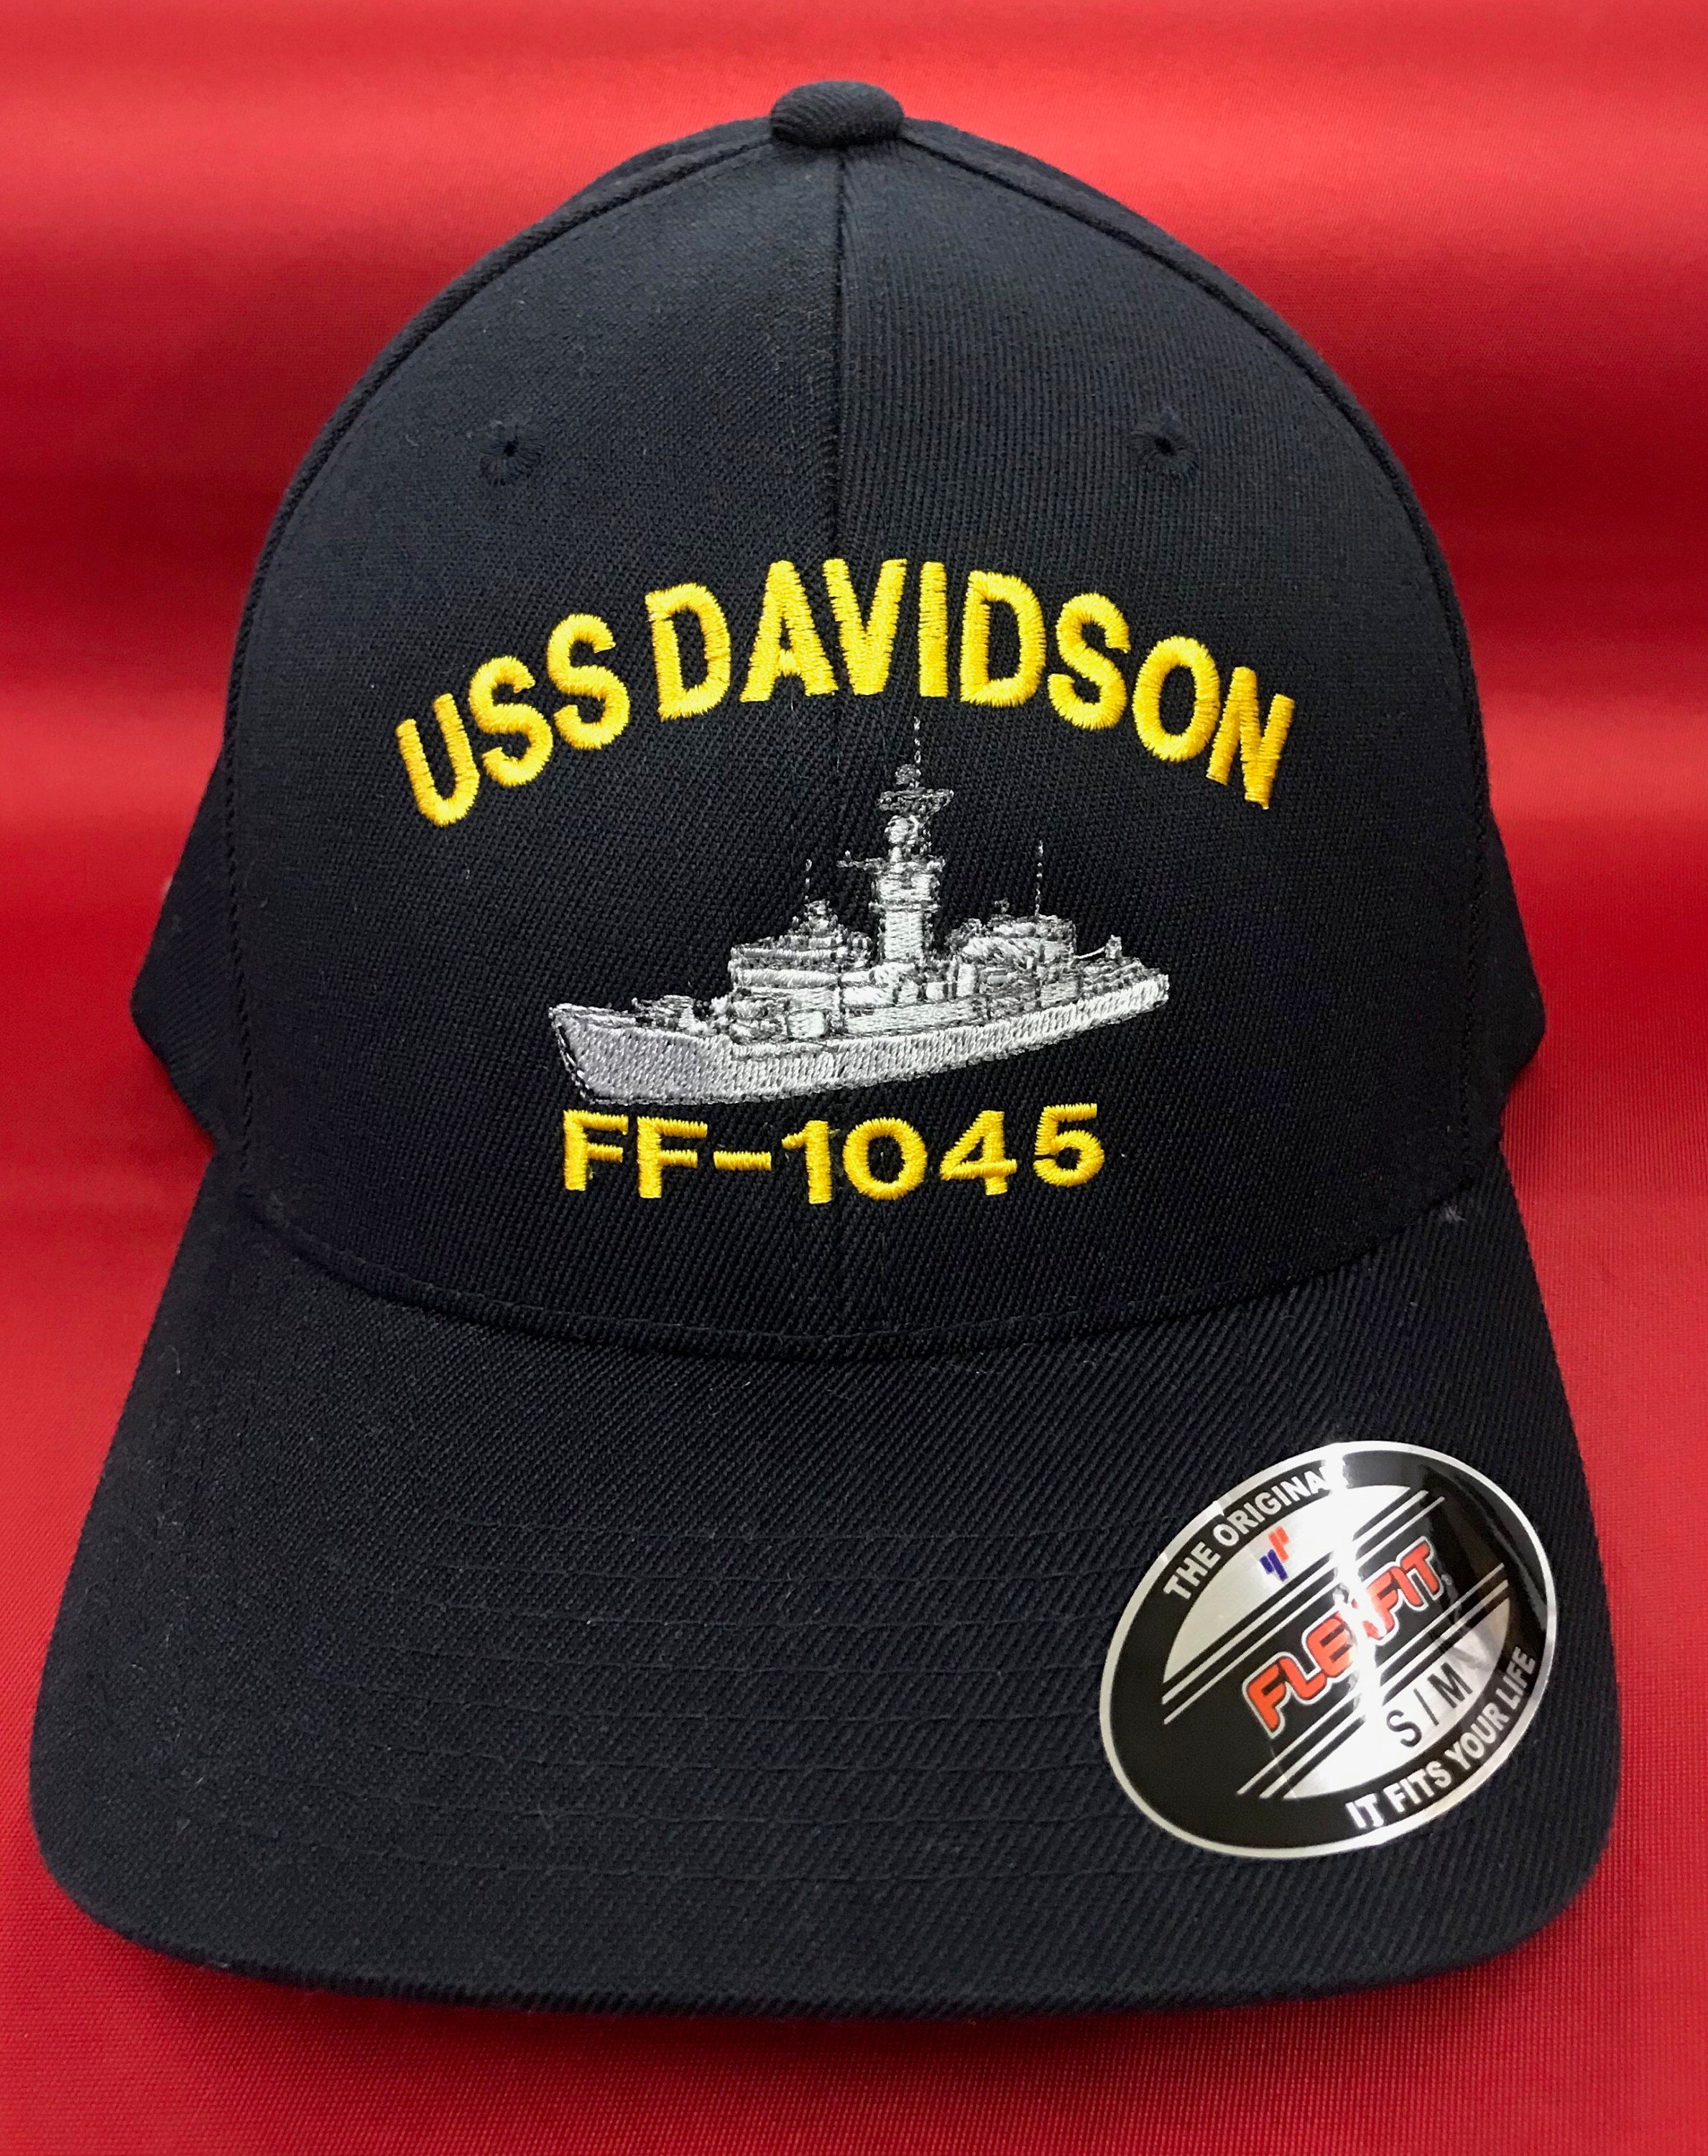 - Military Enlisted USS DAVIDSON Ball Hat, Frigate ESWS, Warfare, Hat, Surface Command Flexfit Boat Naval Hat, Cap, Etsy